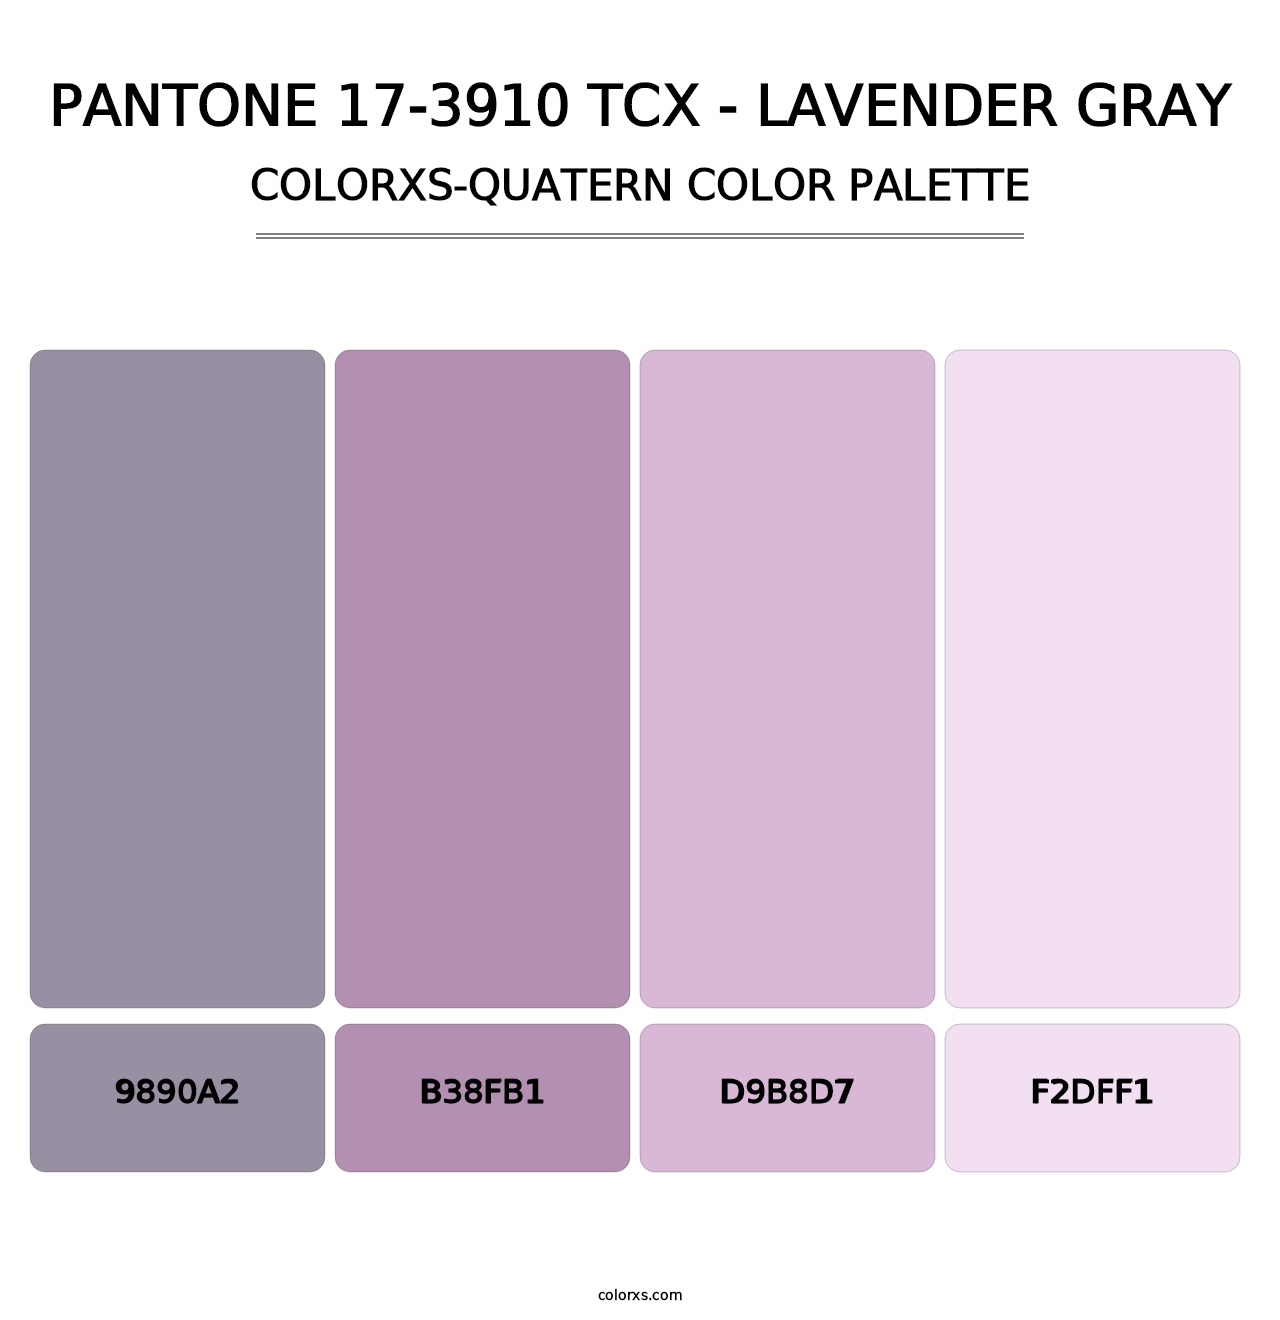 PANTONE 17-3910 TCX - Lavender Gray - Colorxs Quatern Palette